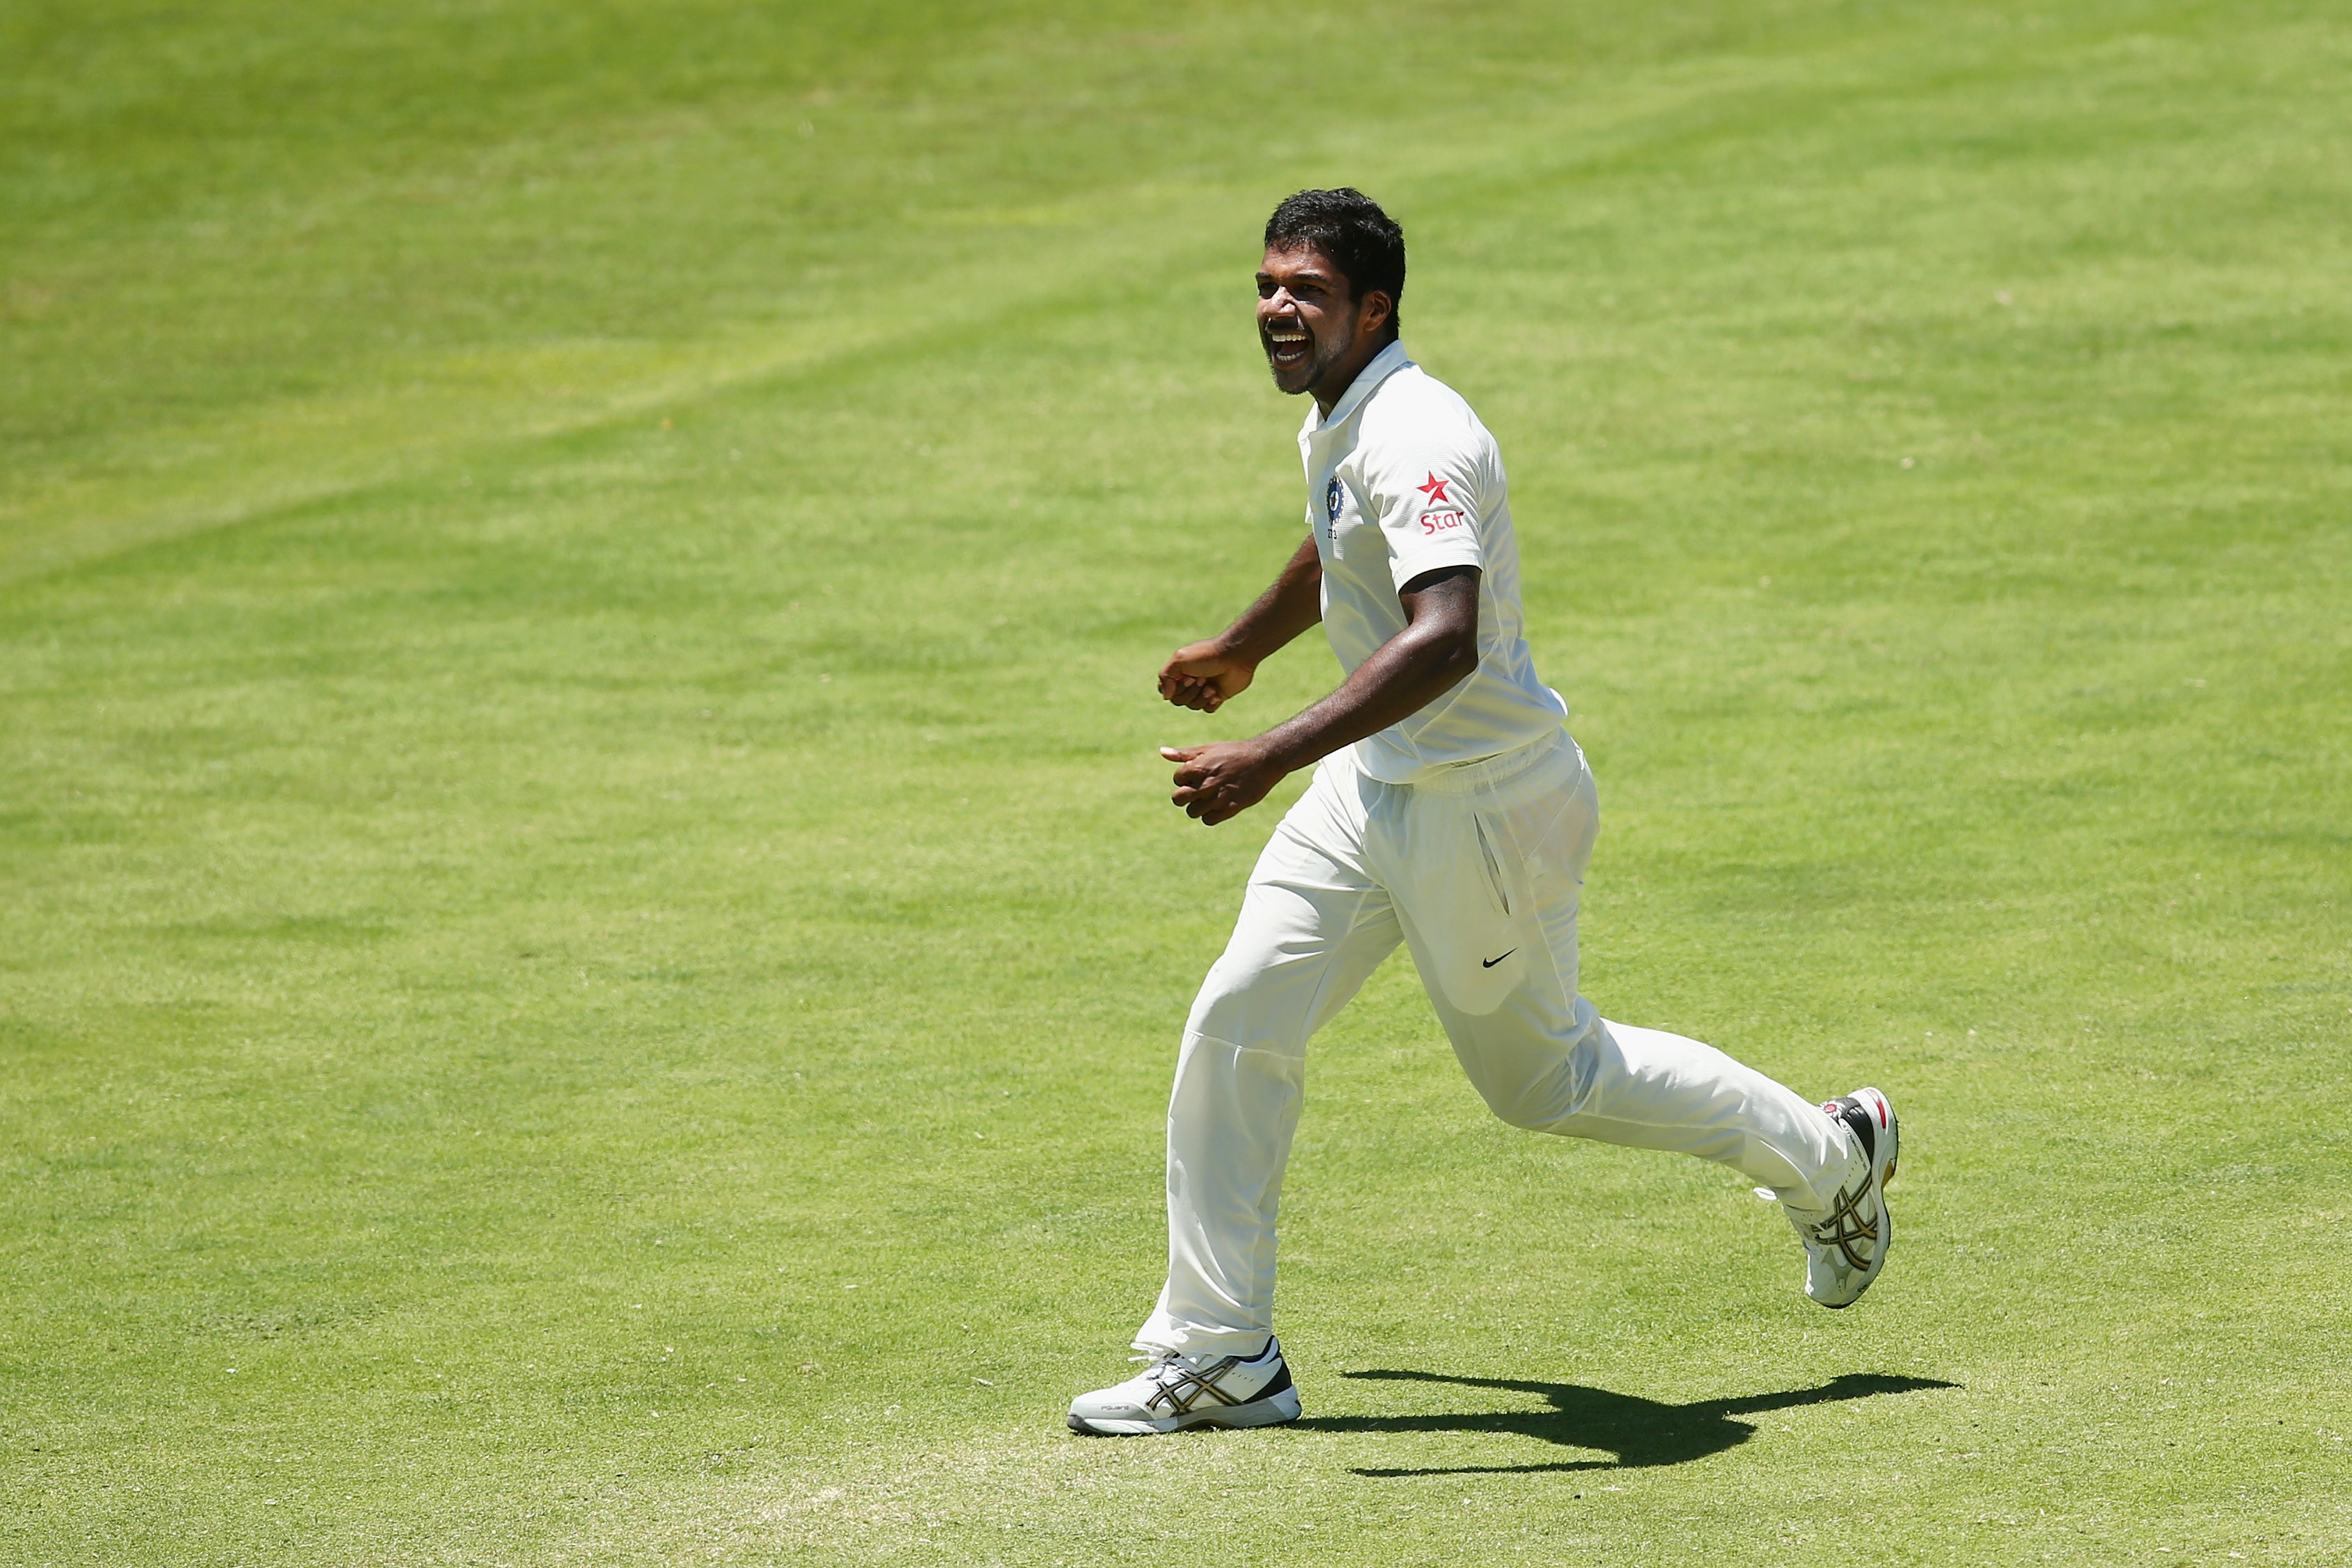 Fast bowler Varun Aaron talks about Indian team selection